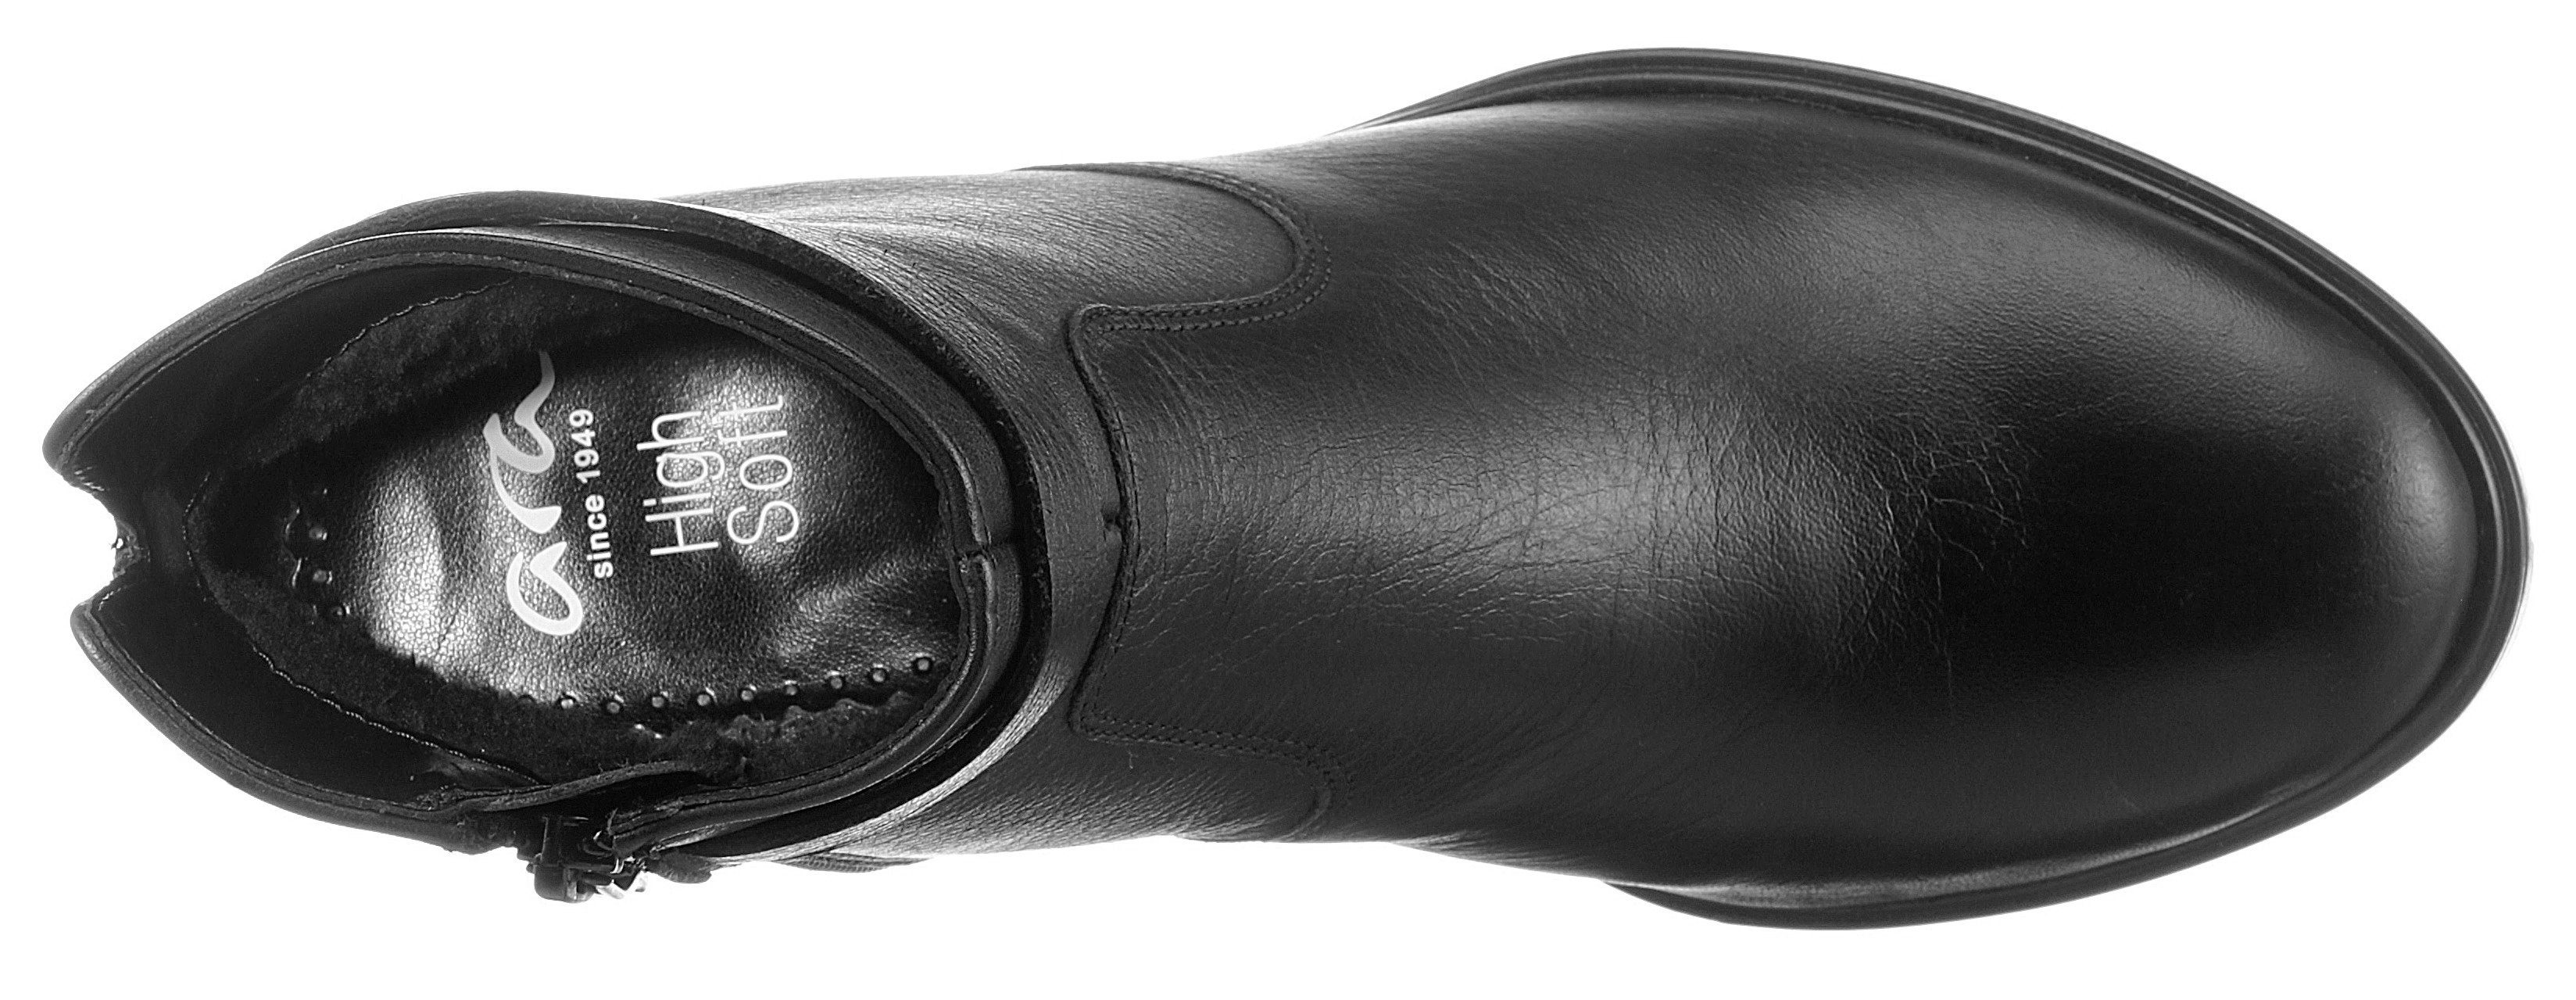 Ara RONDA Stiefelette in klassischer schwarz G-Weite Optik